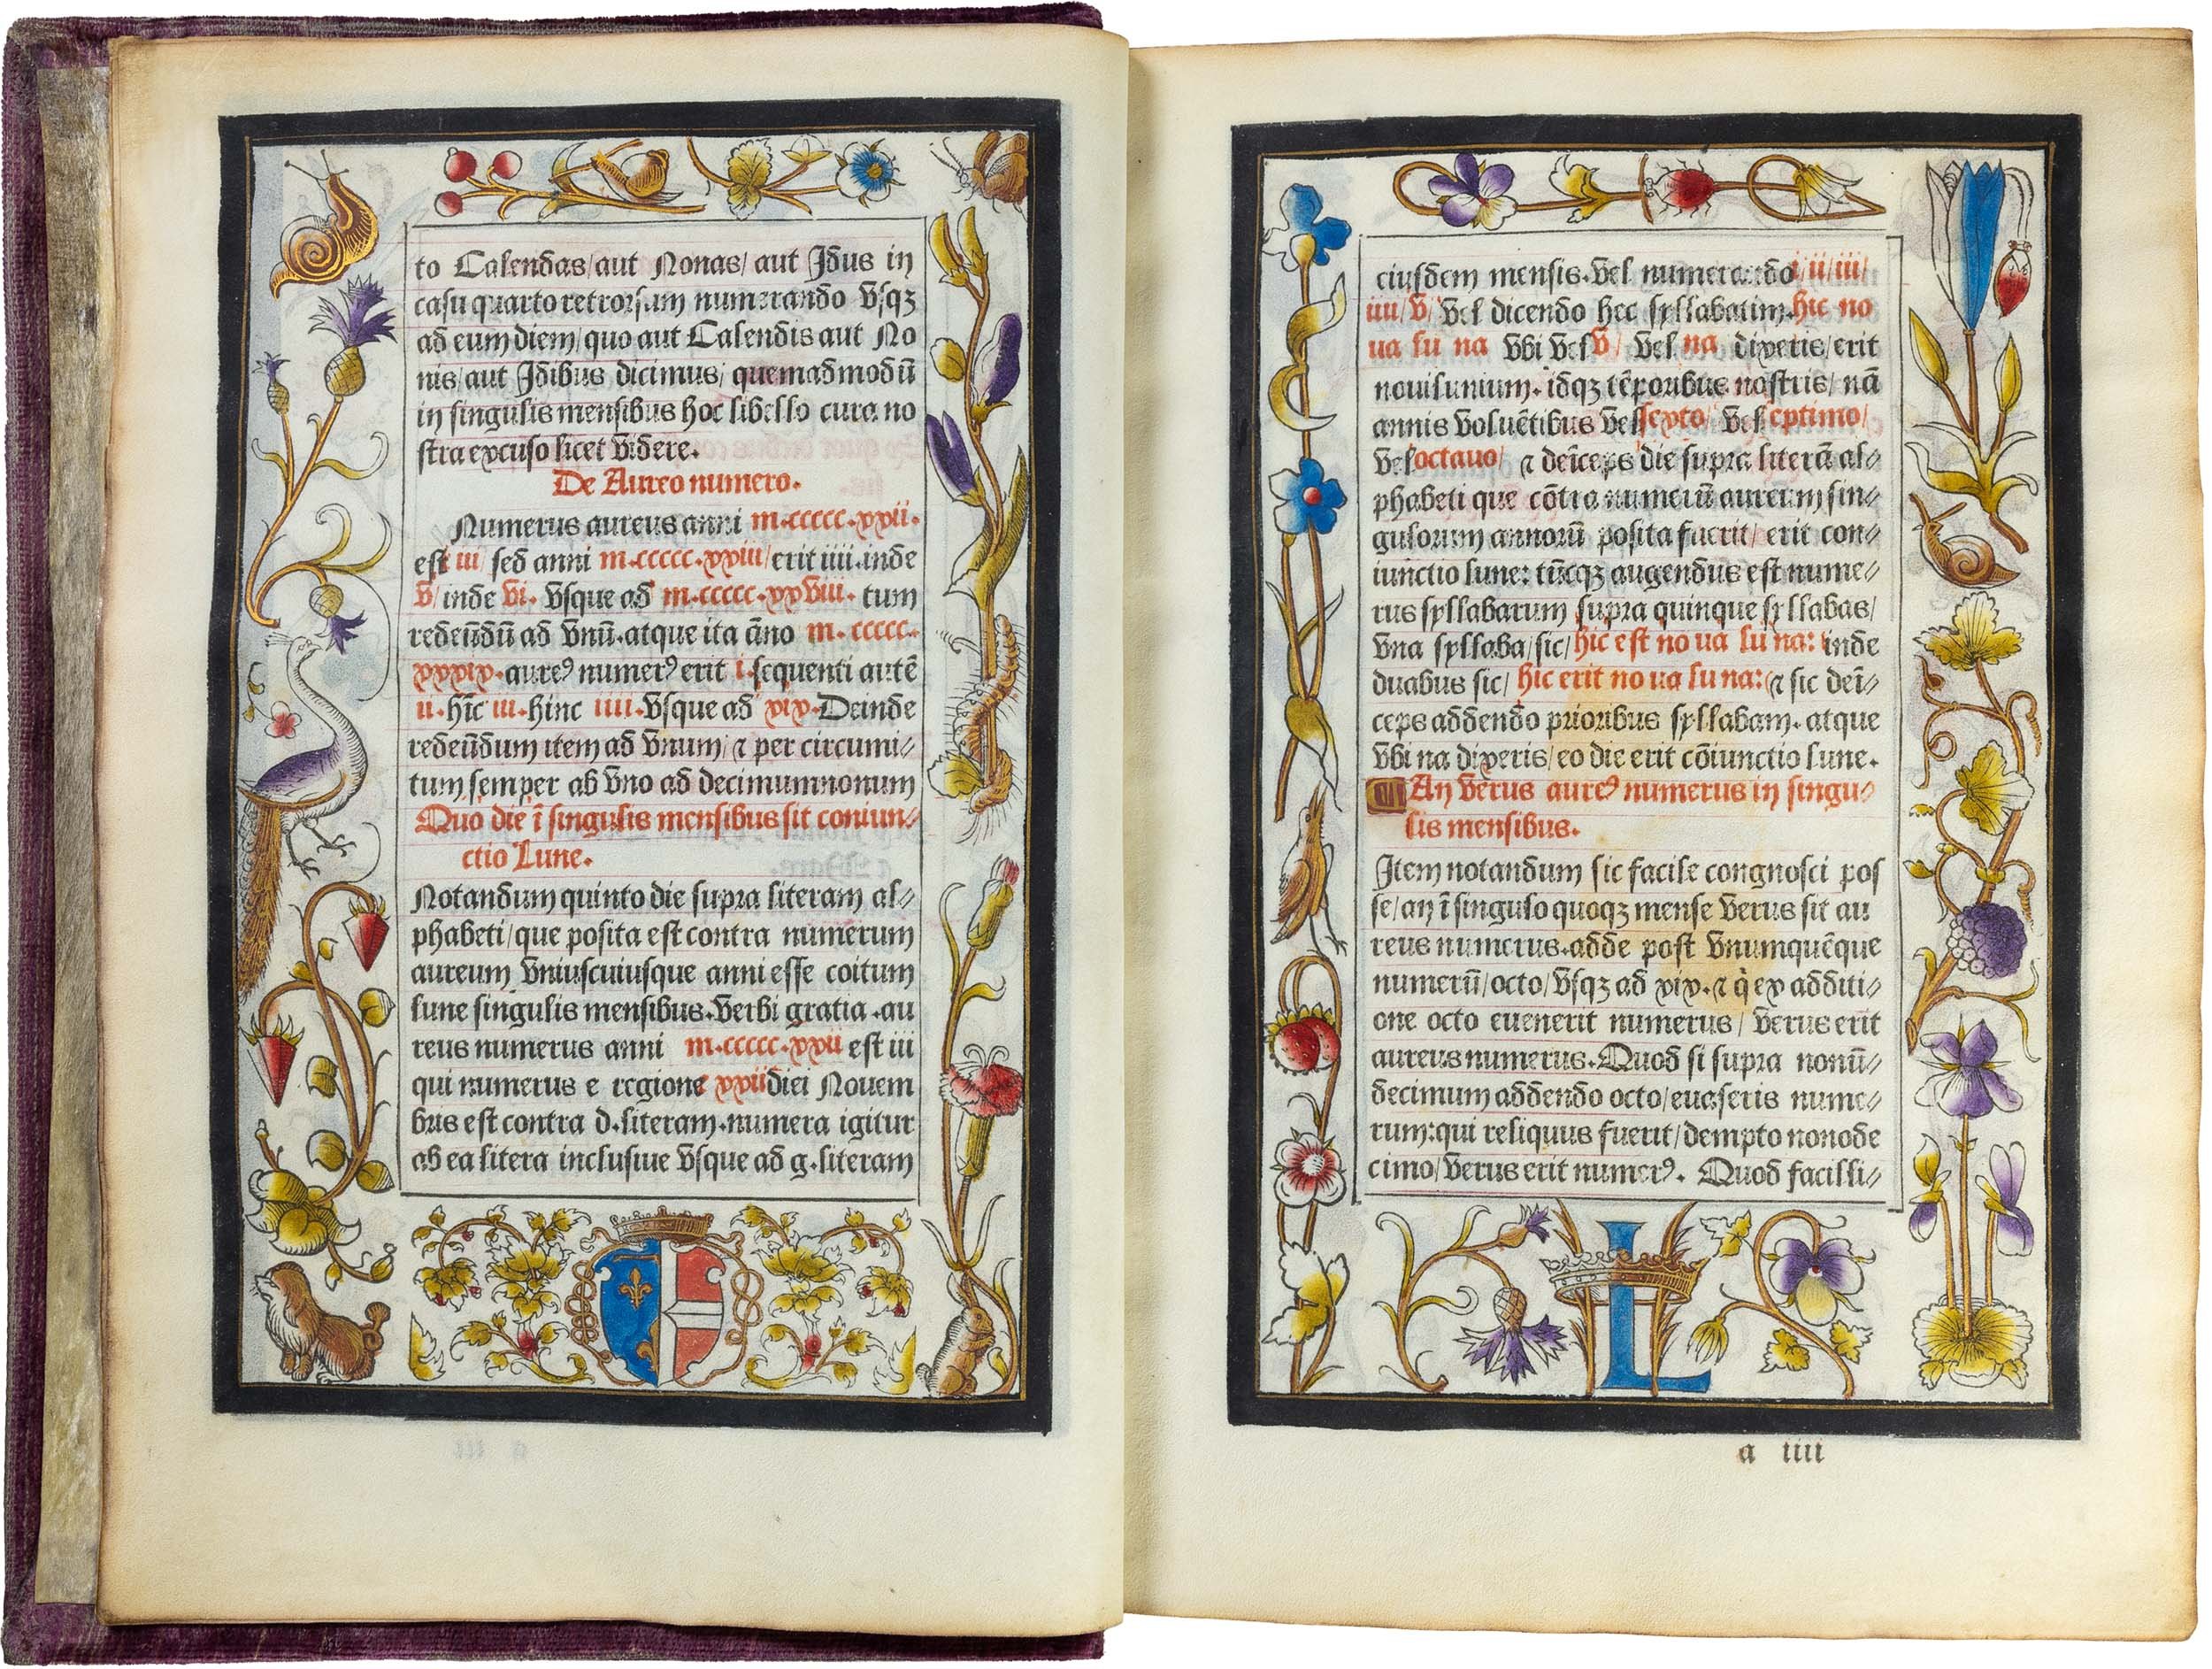 geoffroy-tory-printed-book-of-hours-illuminated-vellum-22-october-1527-prince-dessing-villeneuve-horae-bmv-06.jpg